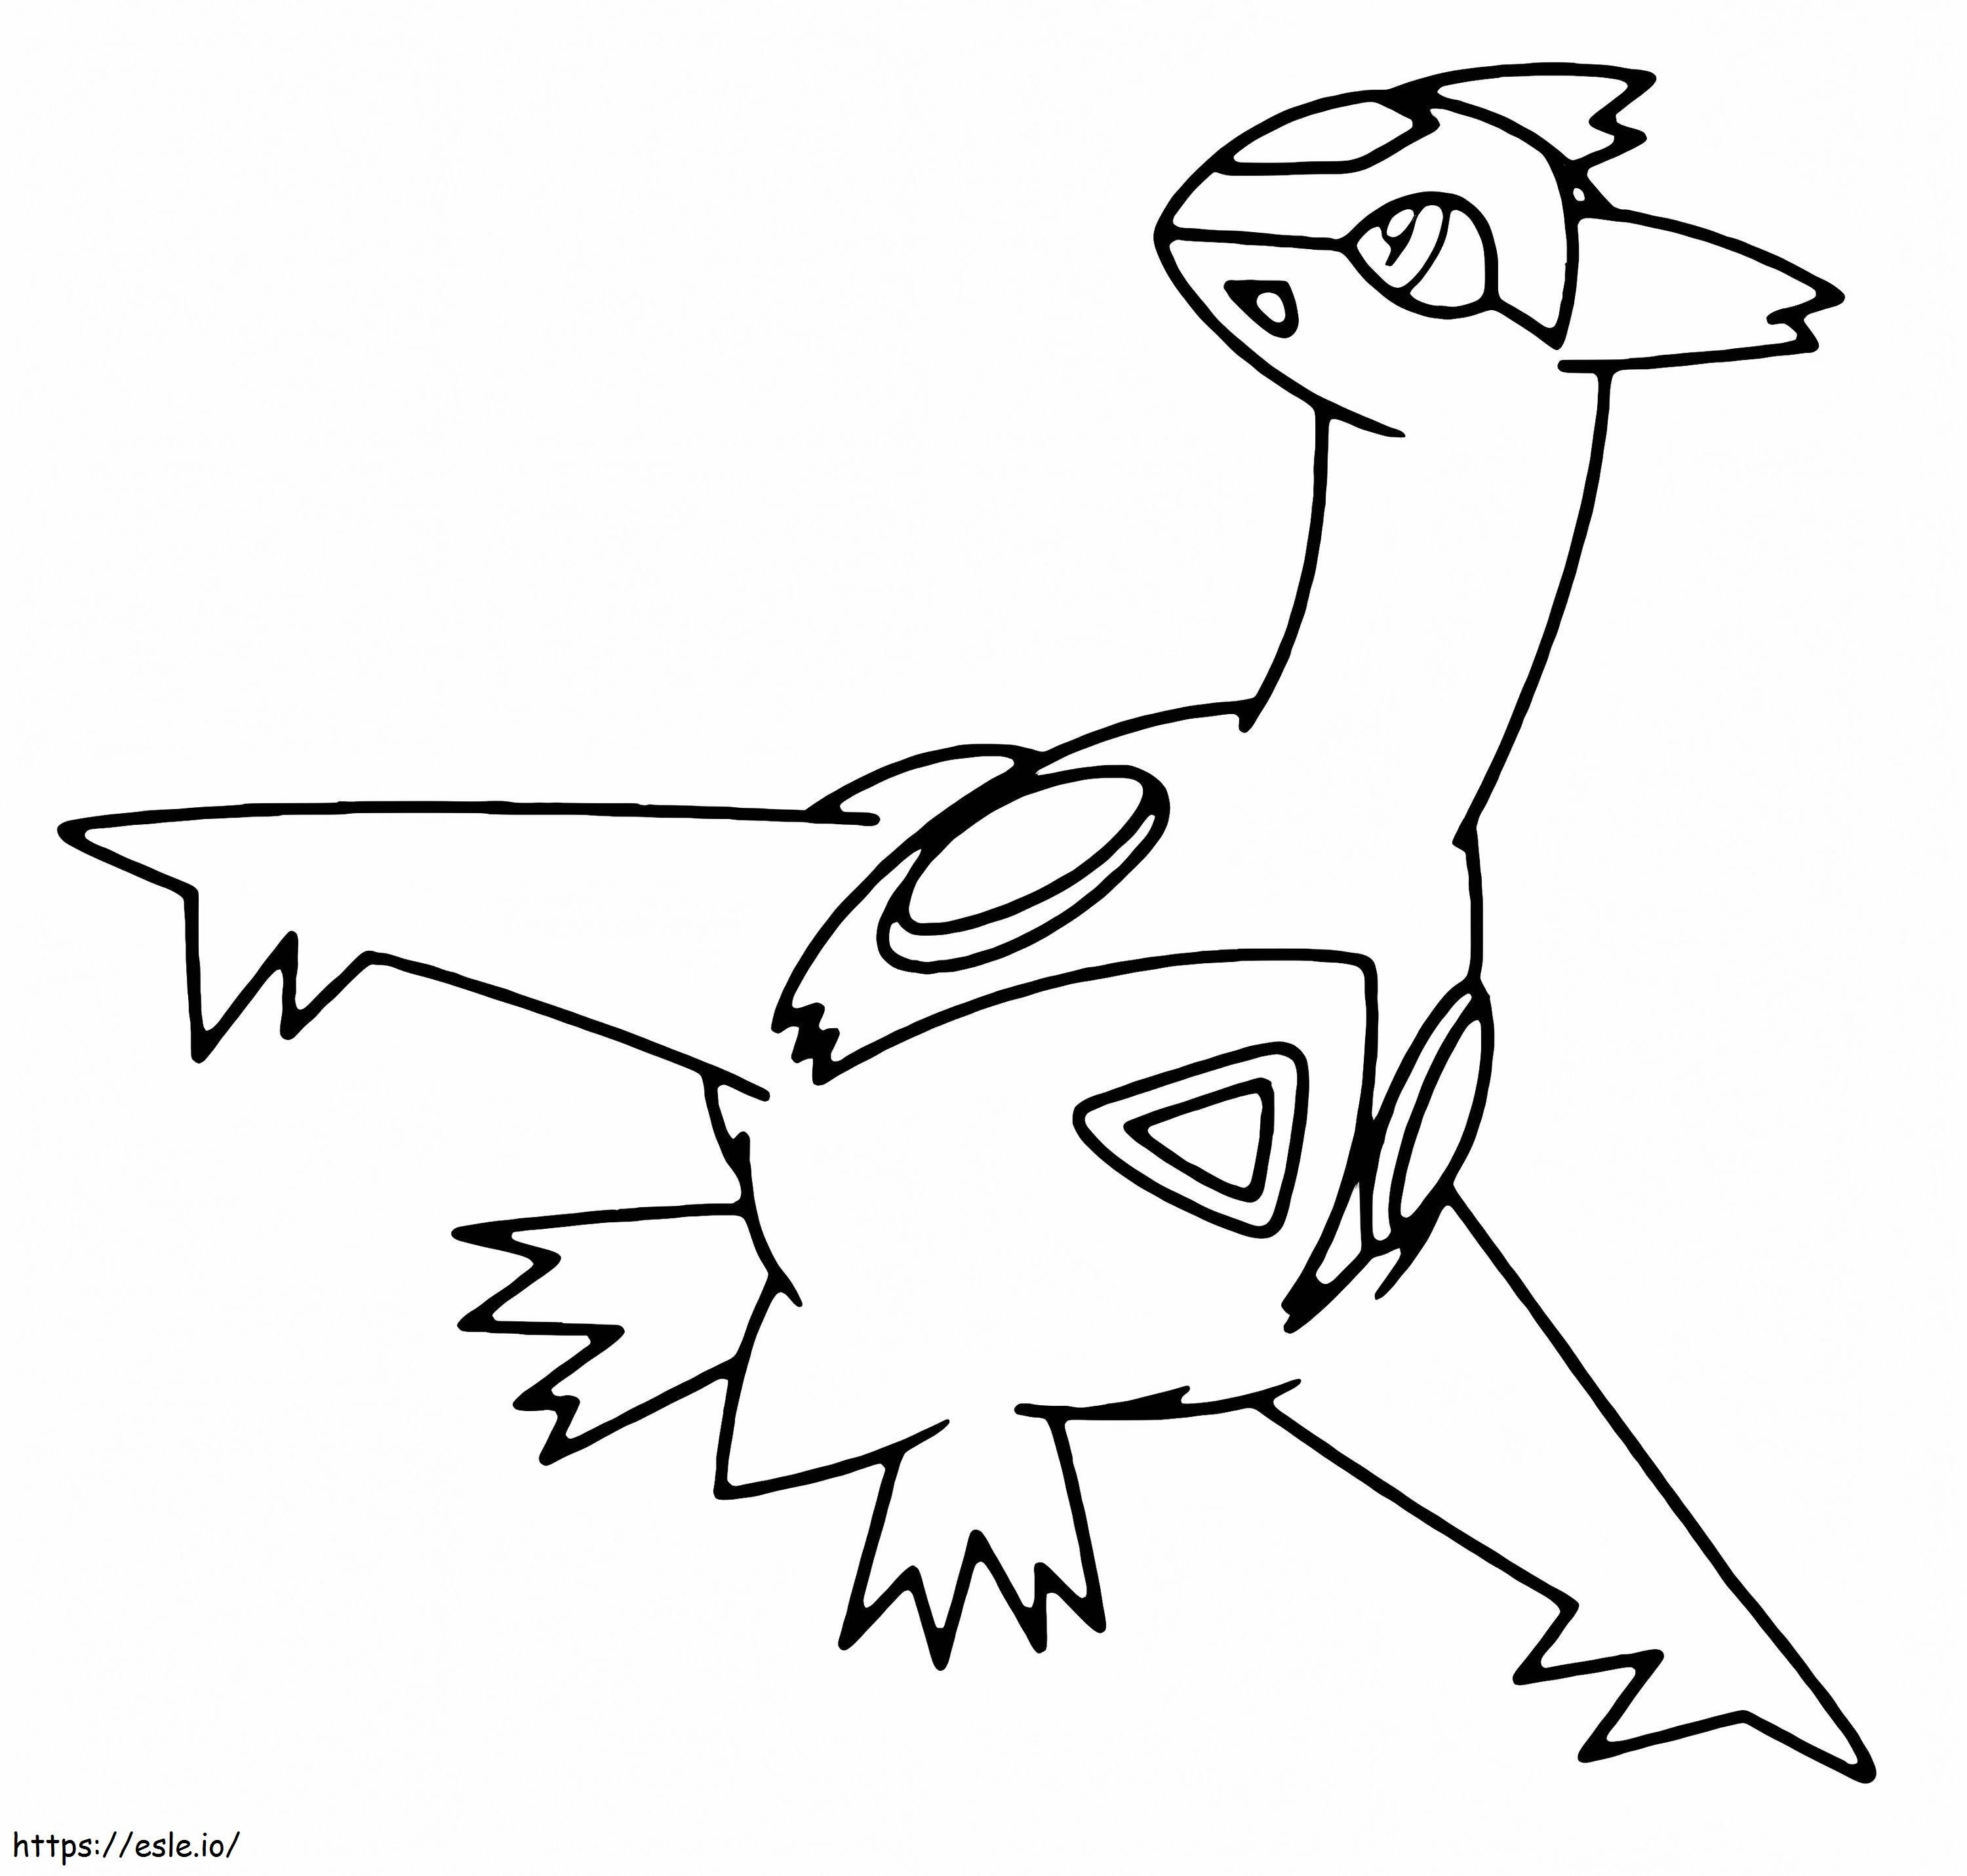 Druckbares Latias-Pokémon ausmalbilder